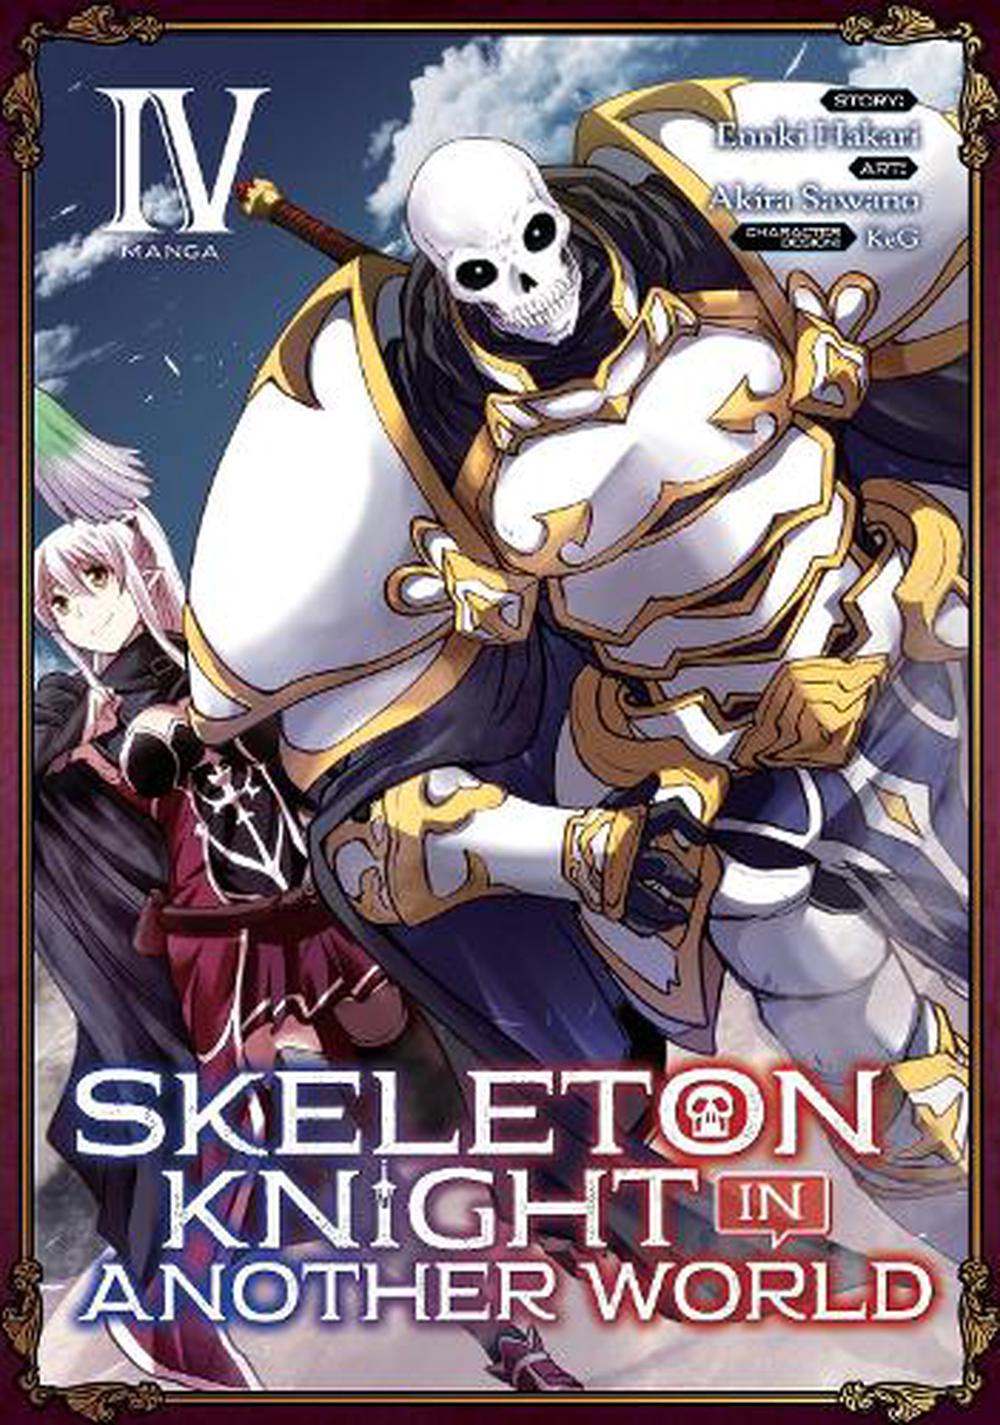 Skeleton Knight In Another World Manga Vol 4 By Ennki Hakari